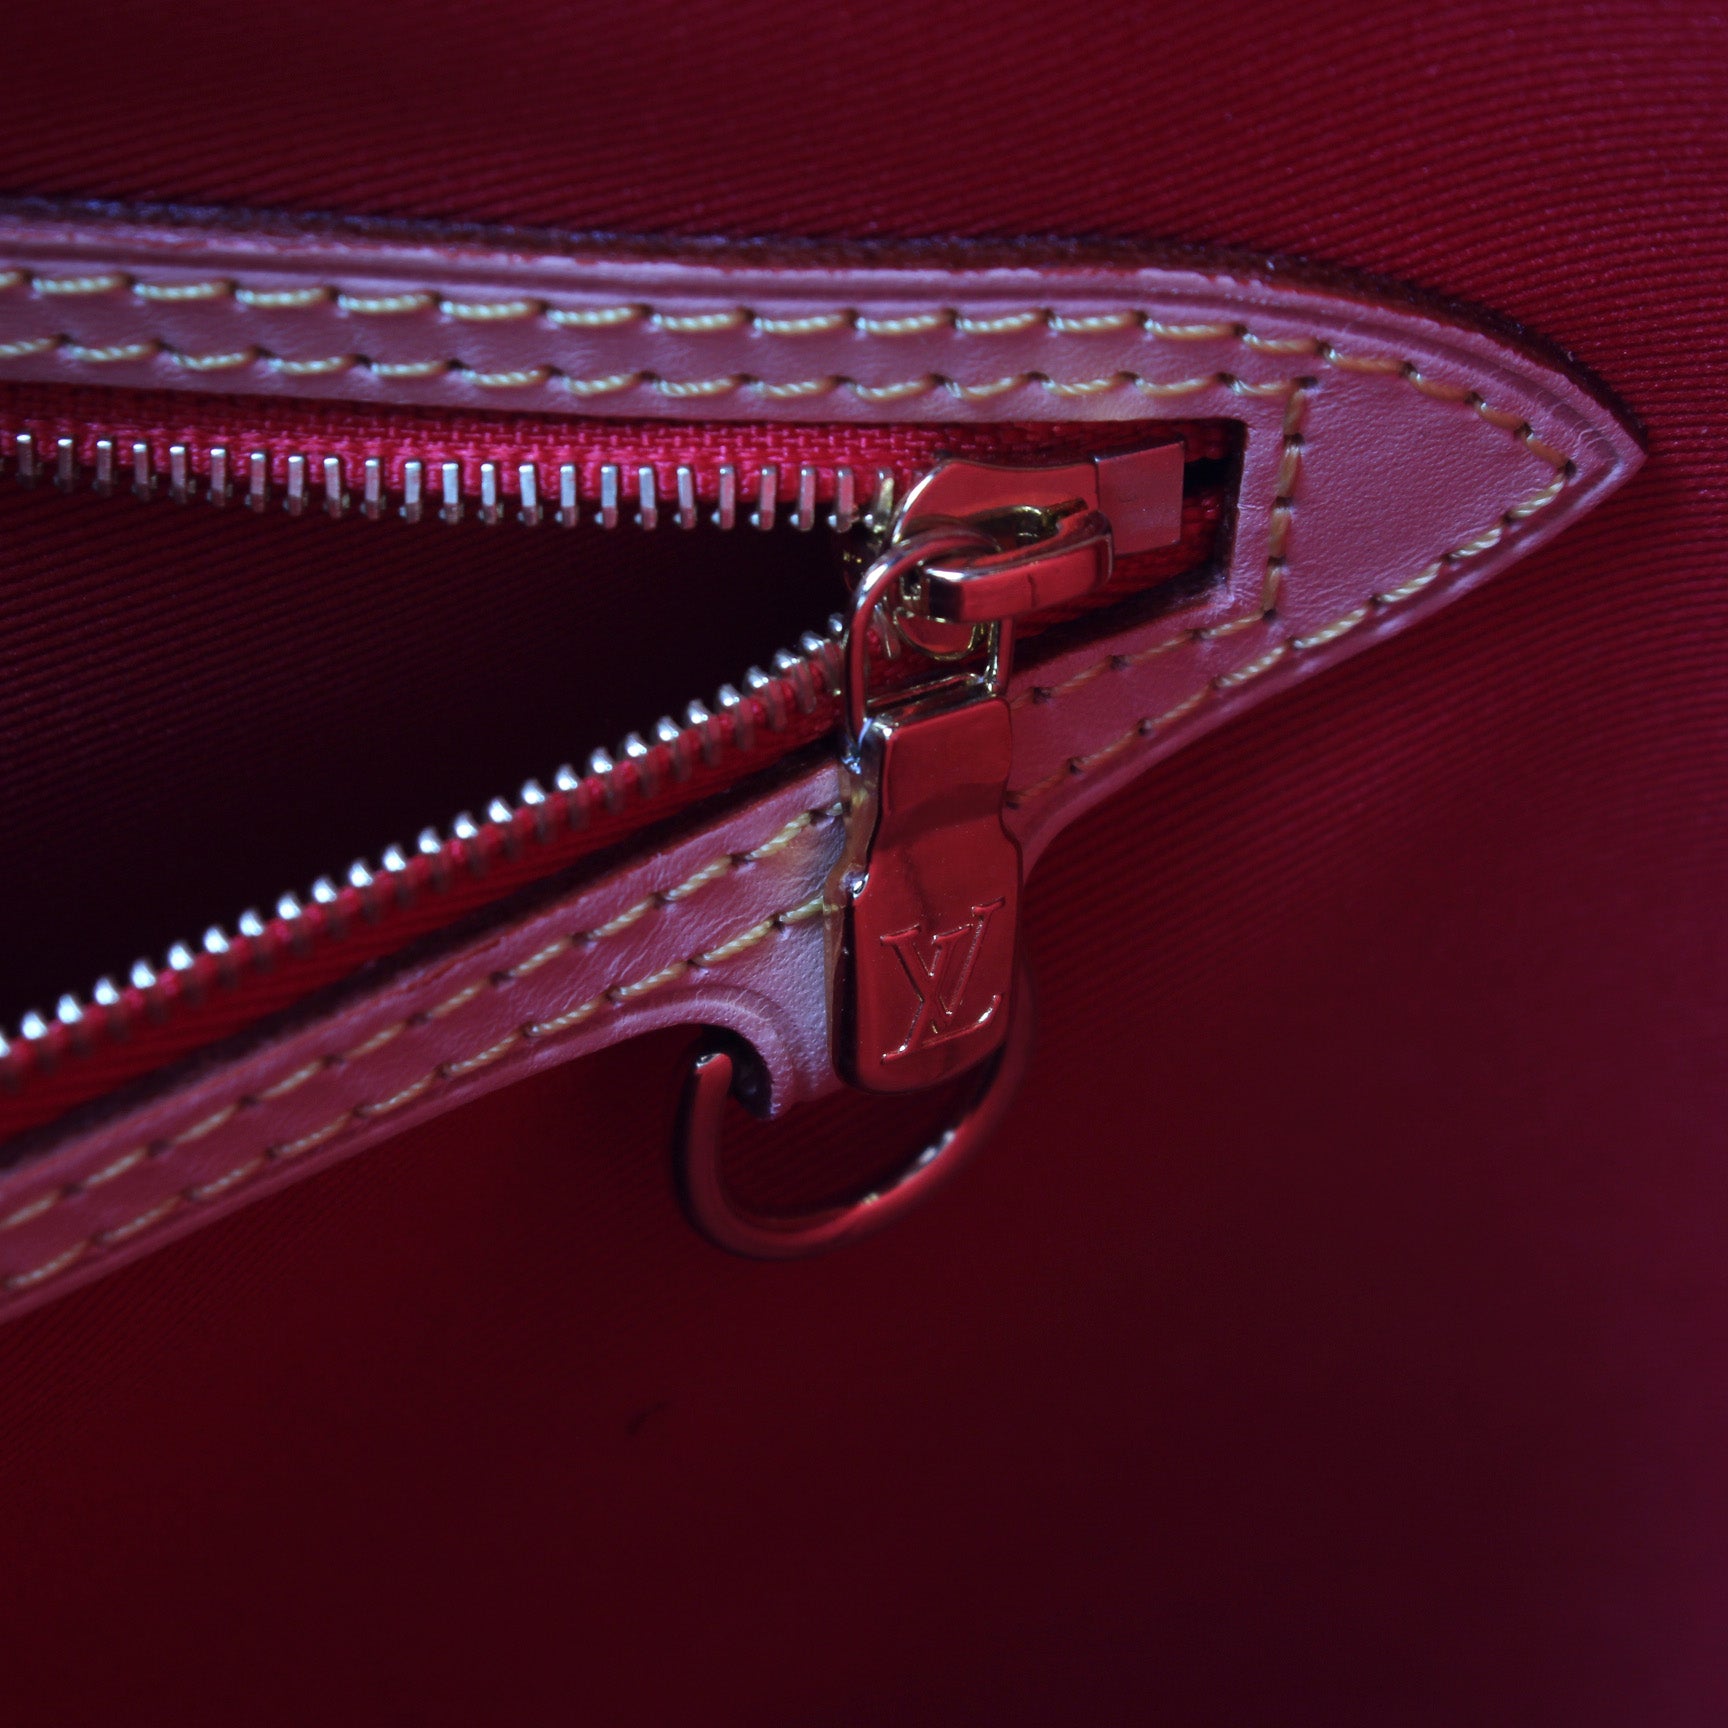 Checkbook Cover Monogram – Keeks Designer Handbags